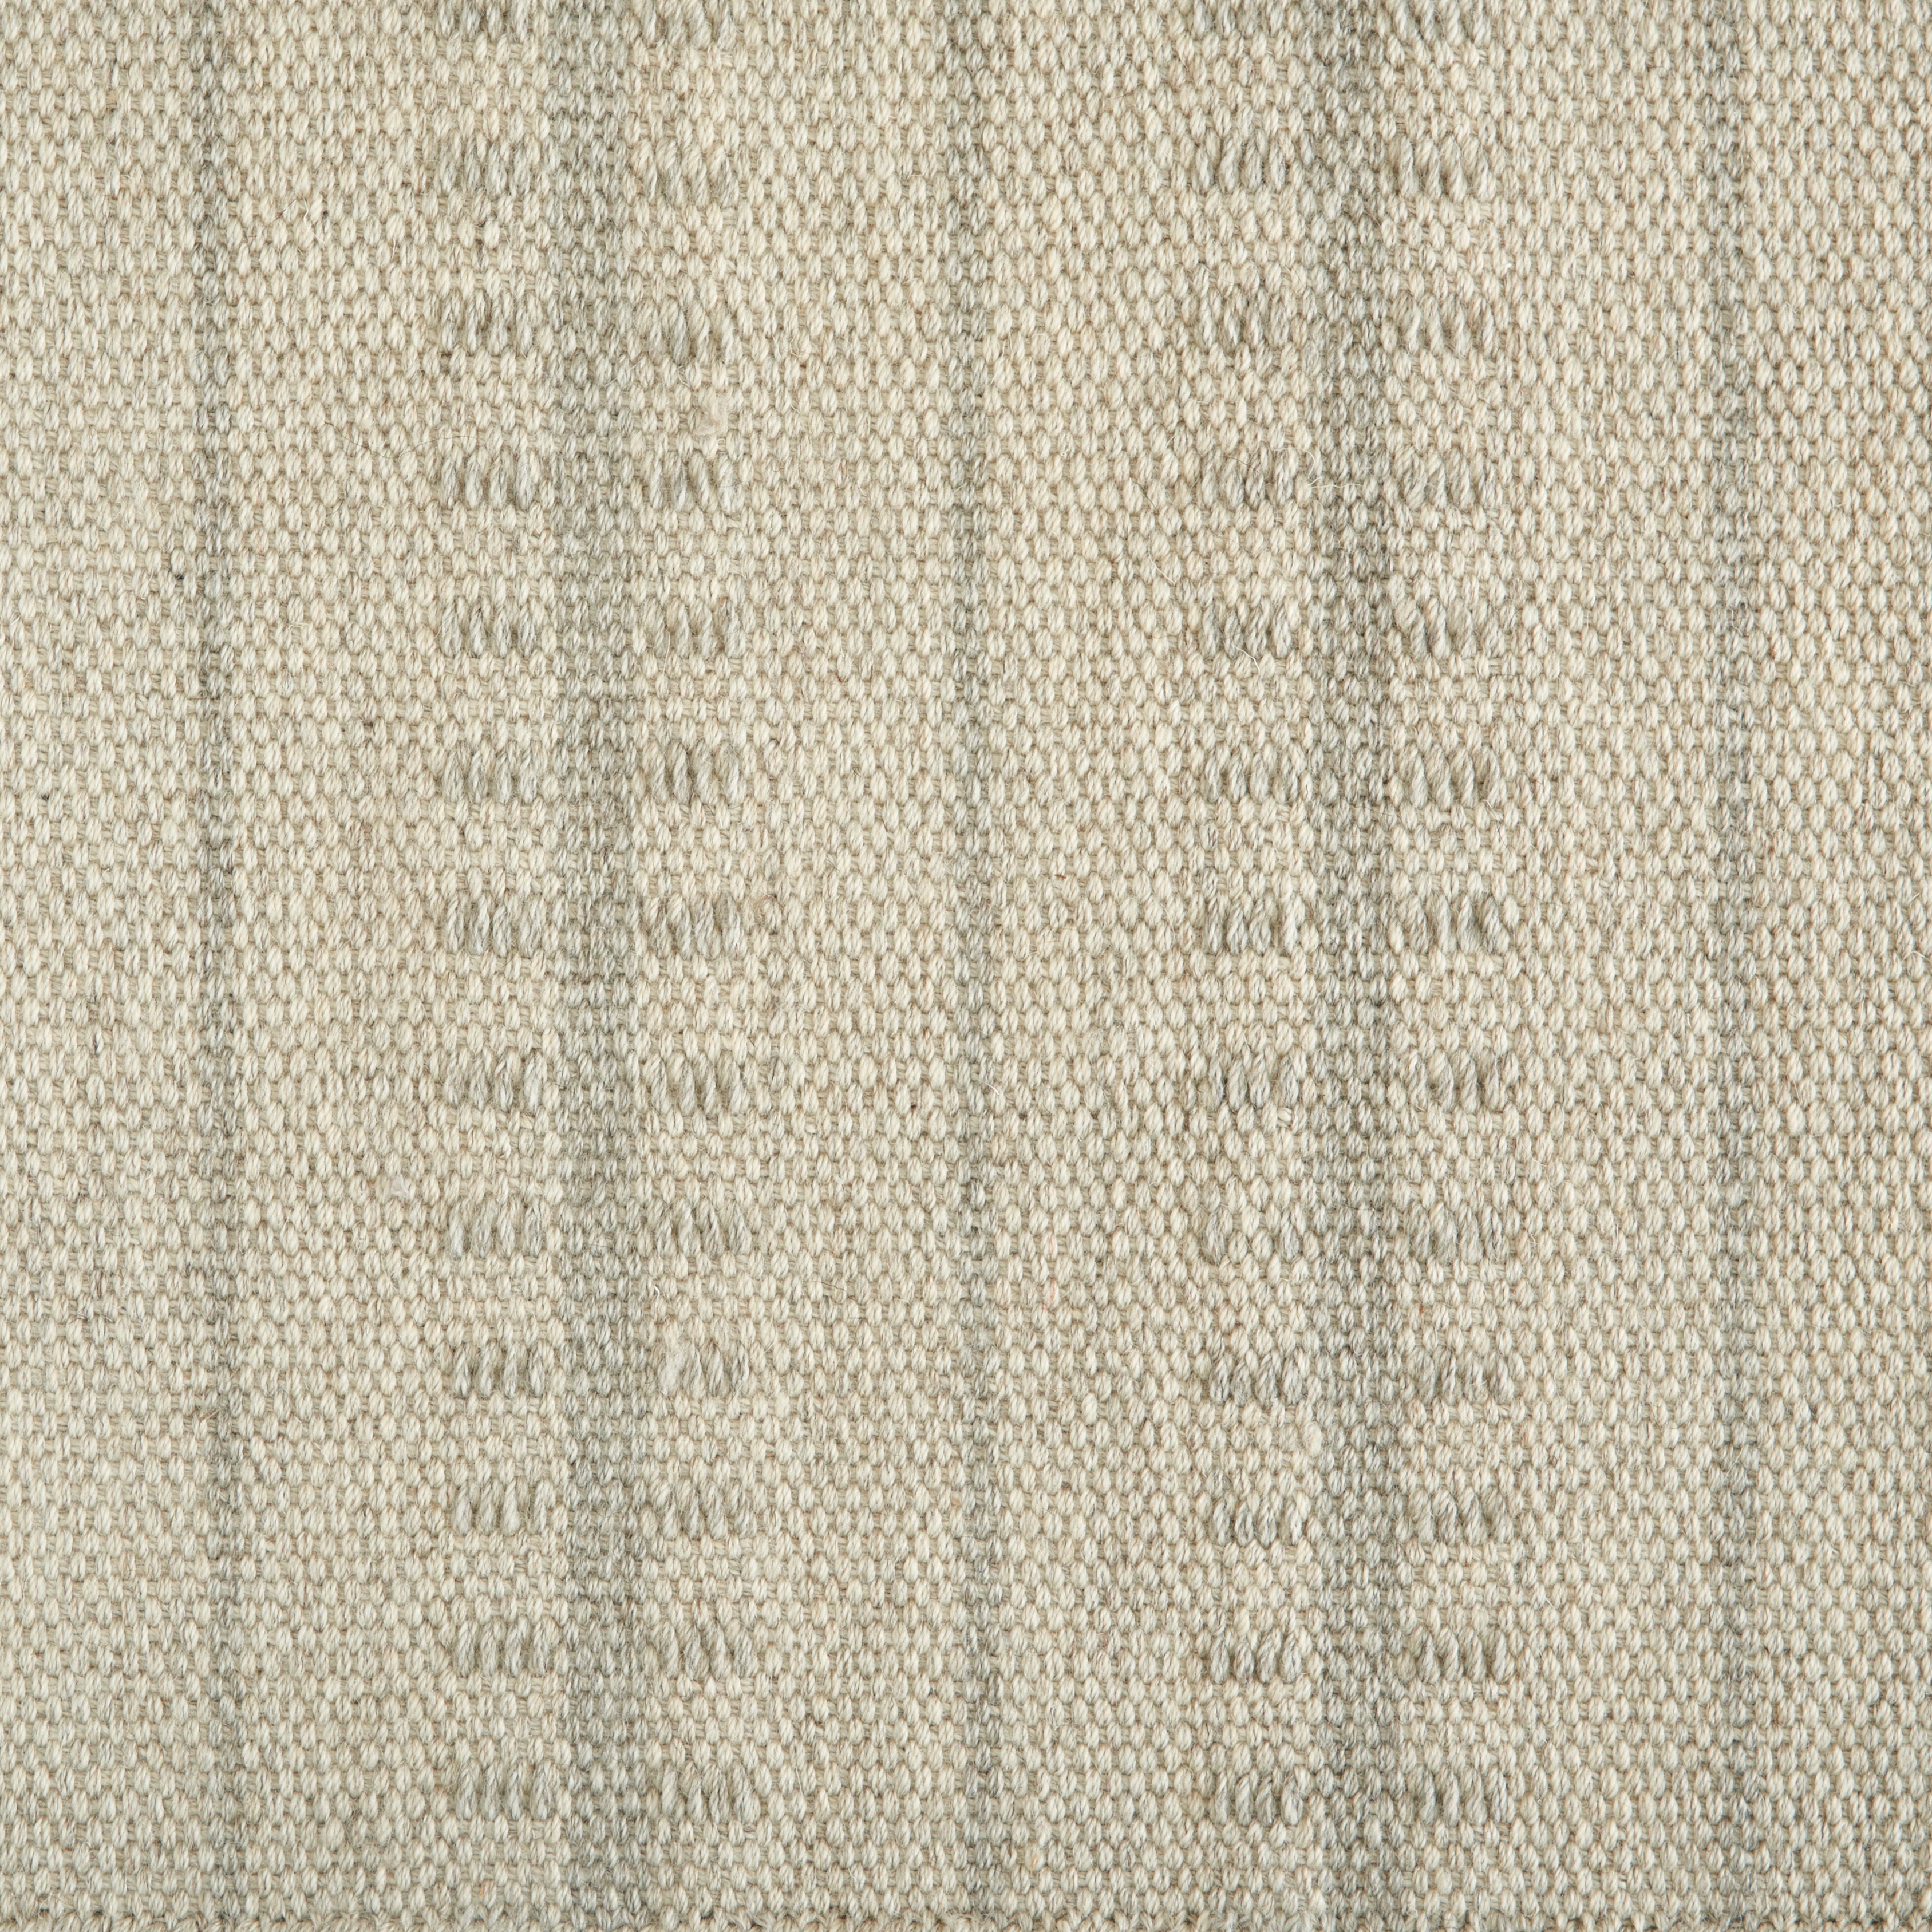 Wool broadloom carpet swatch in a ticked stripe weave in cream and tan.